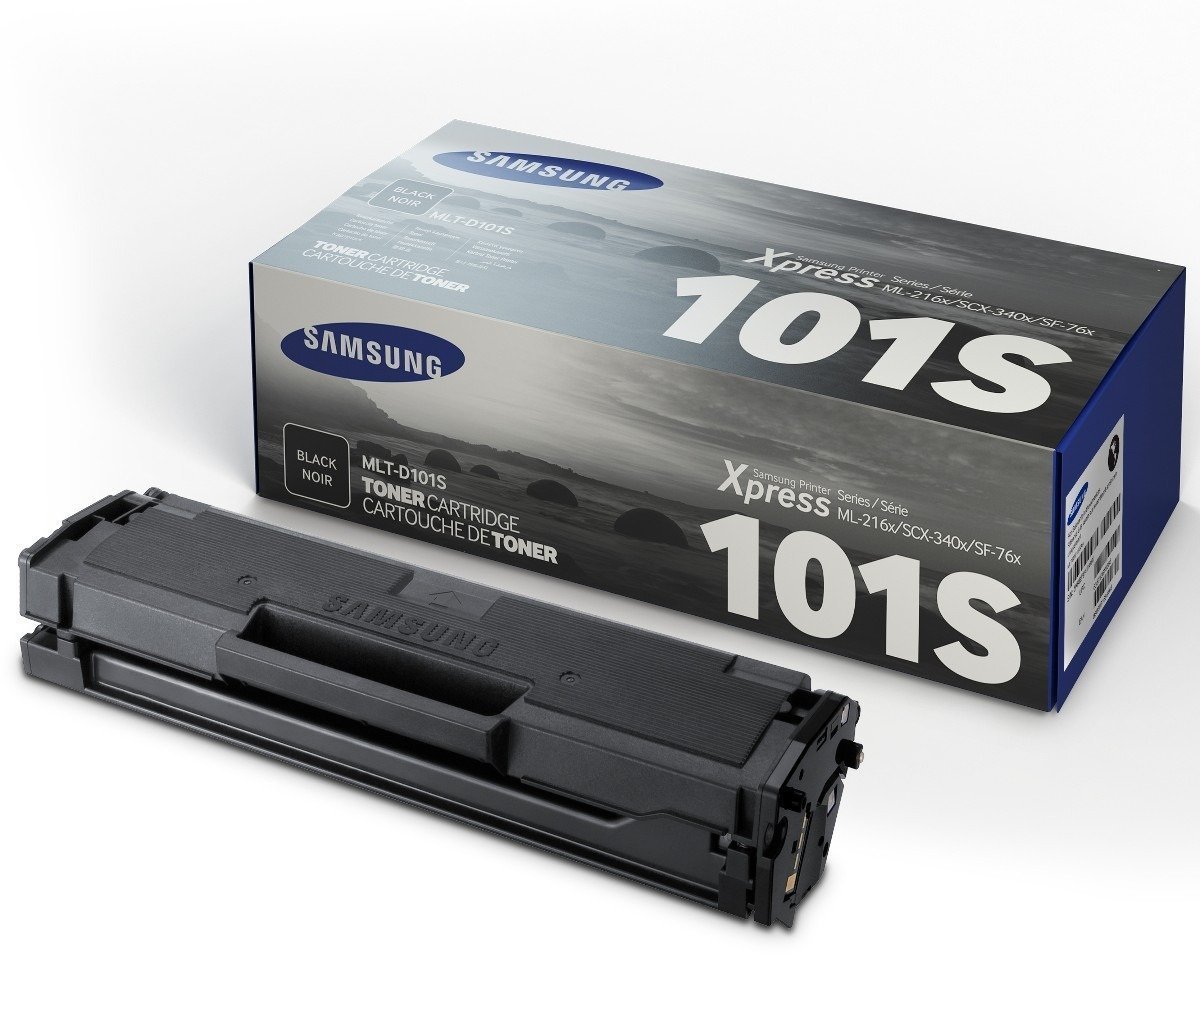 Samsung 101s Black Toner Cartridge - Rs.2450